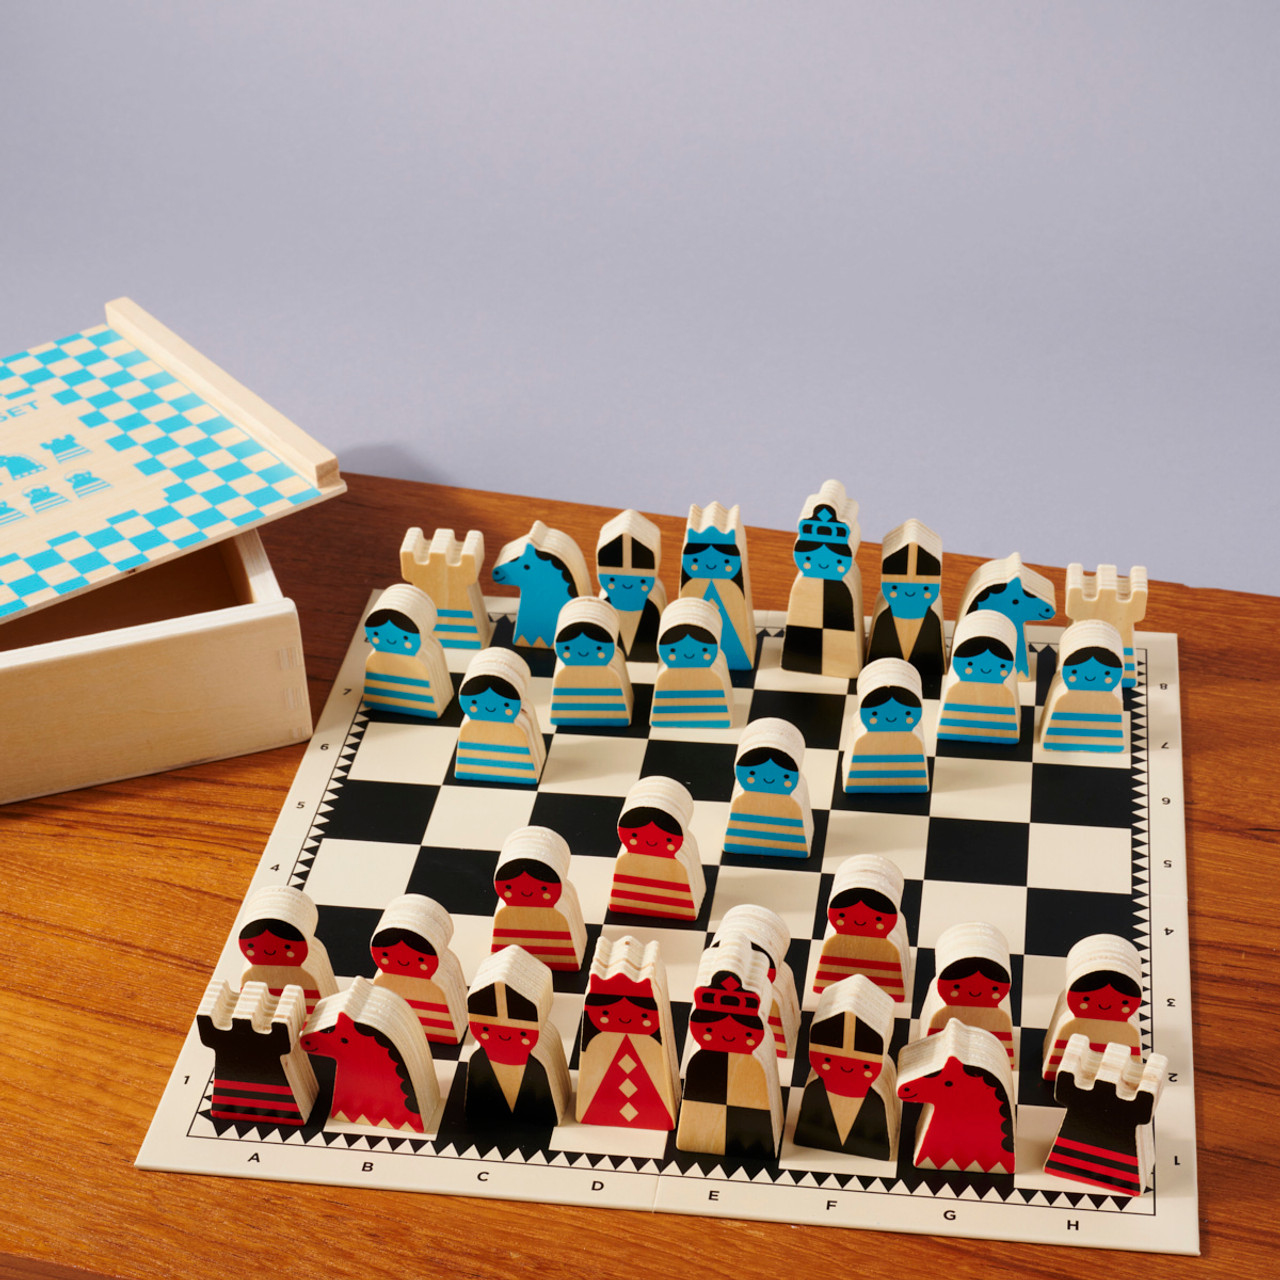 What's My Next Move Chess Player' Women's Hoodie